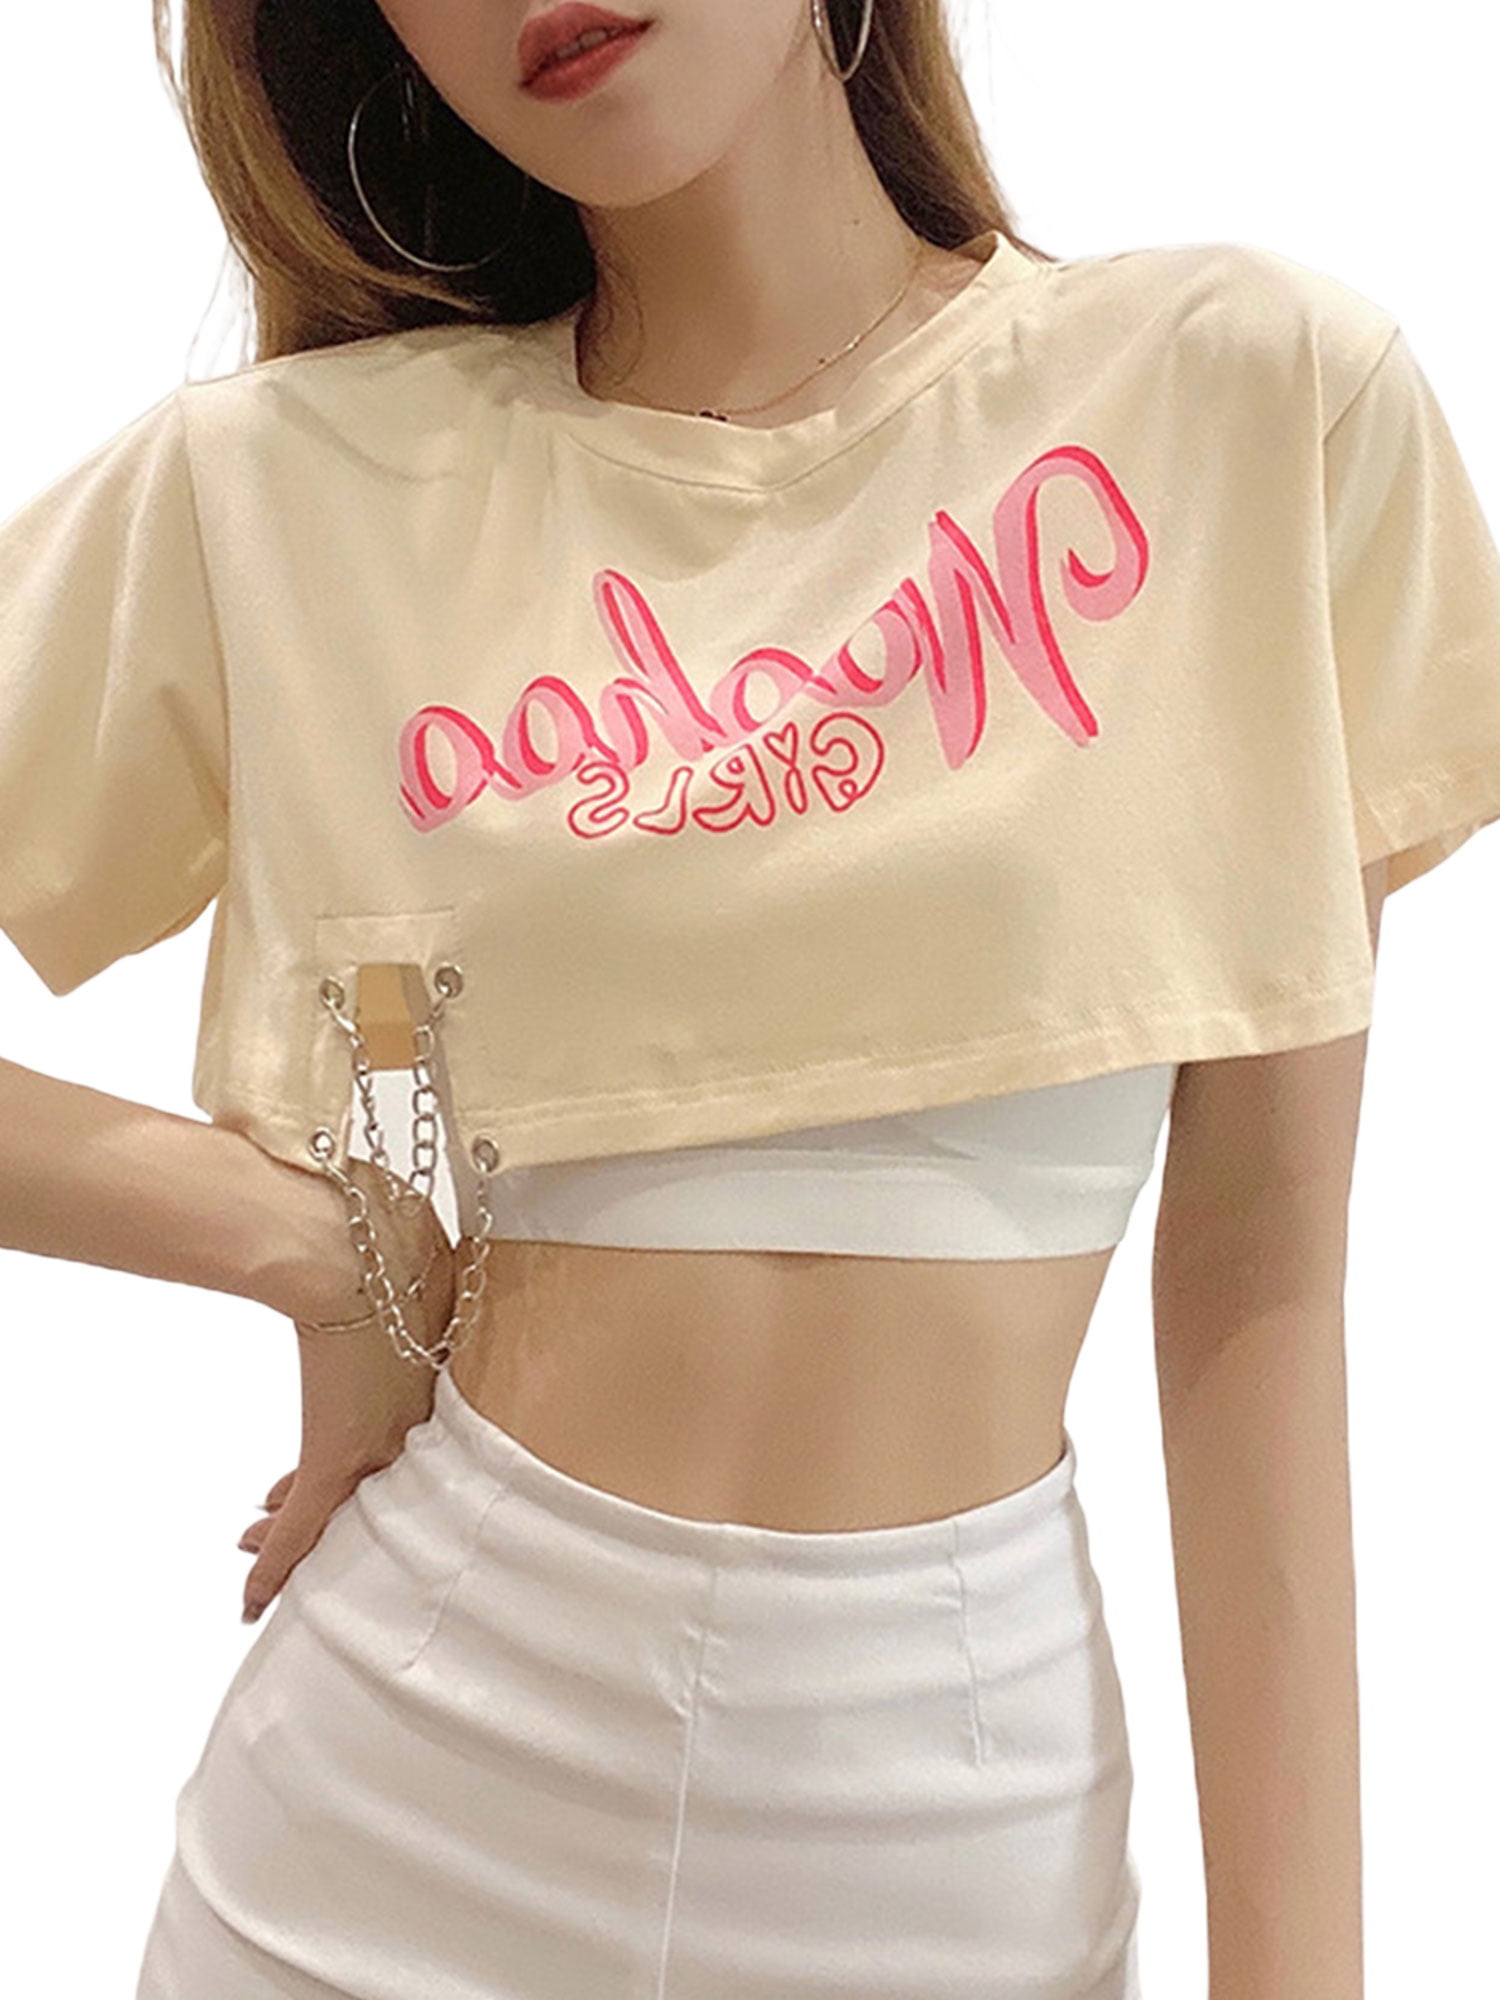 Vanbuy Womens Short Sleeve Graphic Tee Novelty Letter Print T Shirt Summer Tops